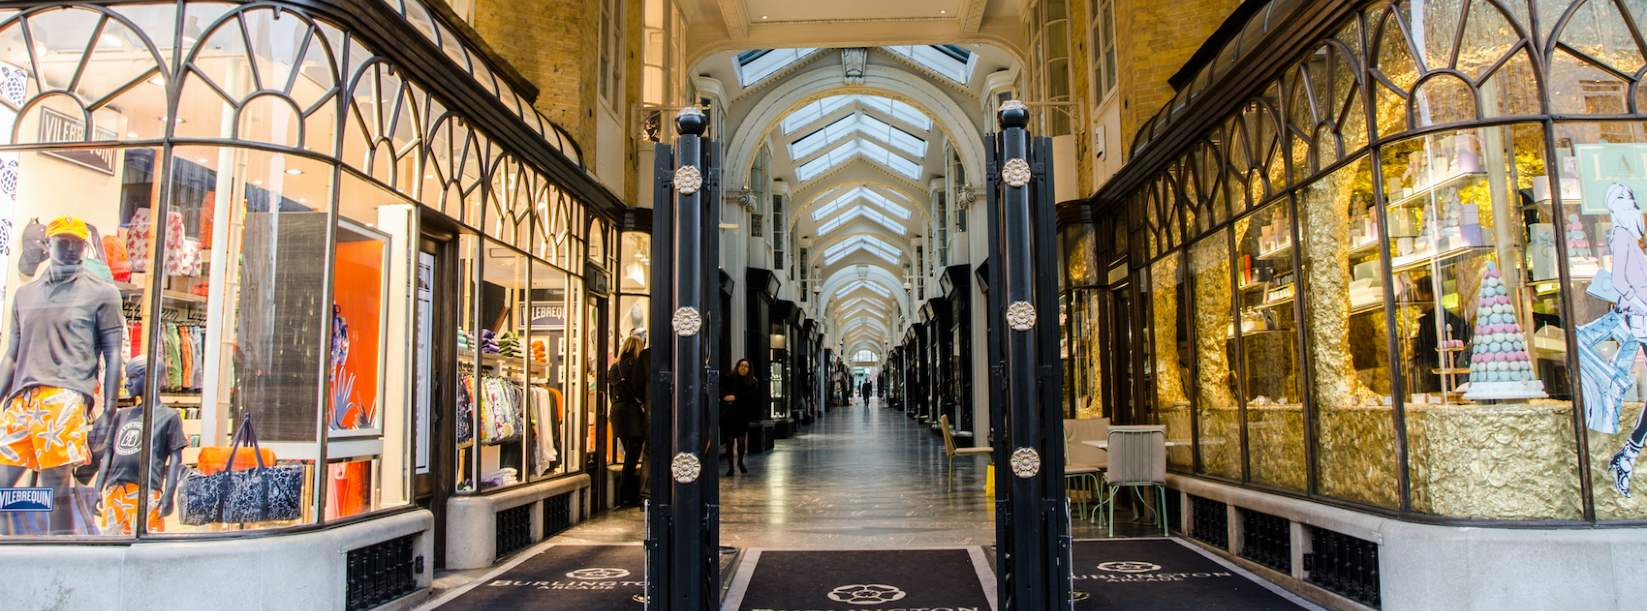 Listed: Burlington Arcade in London's West End